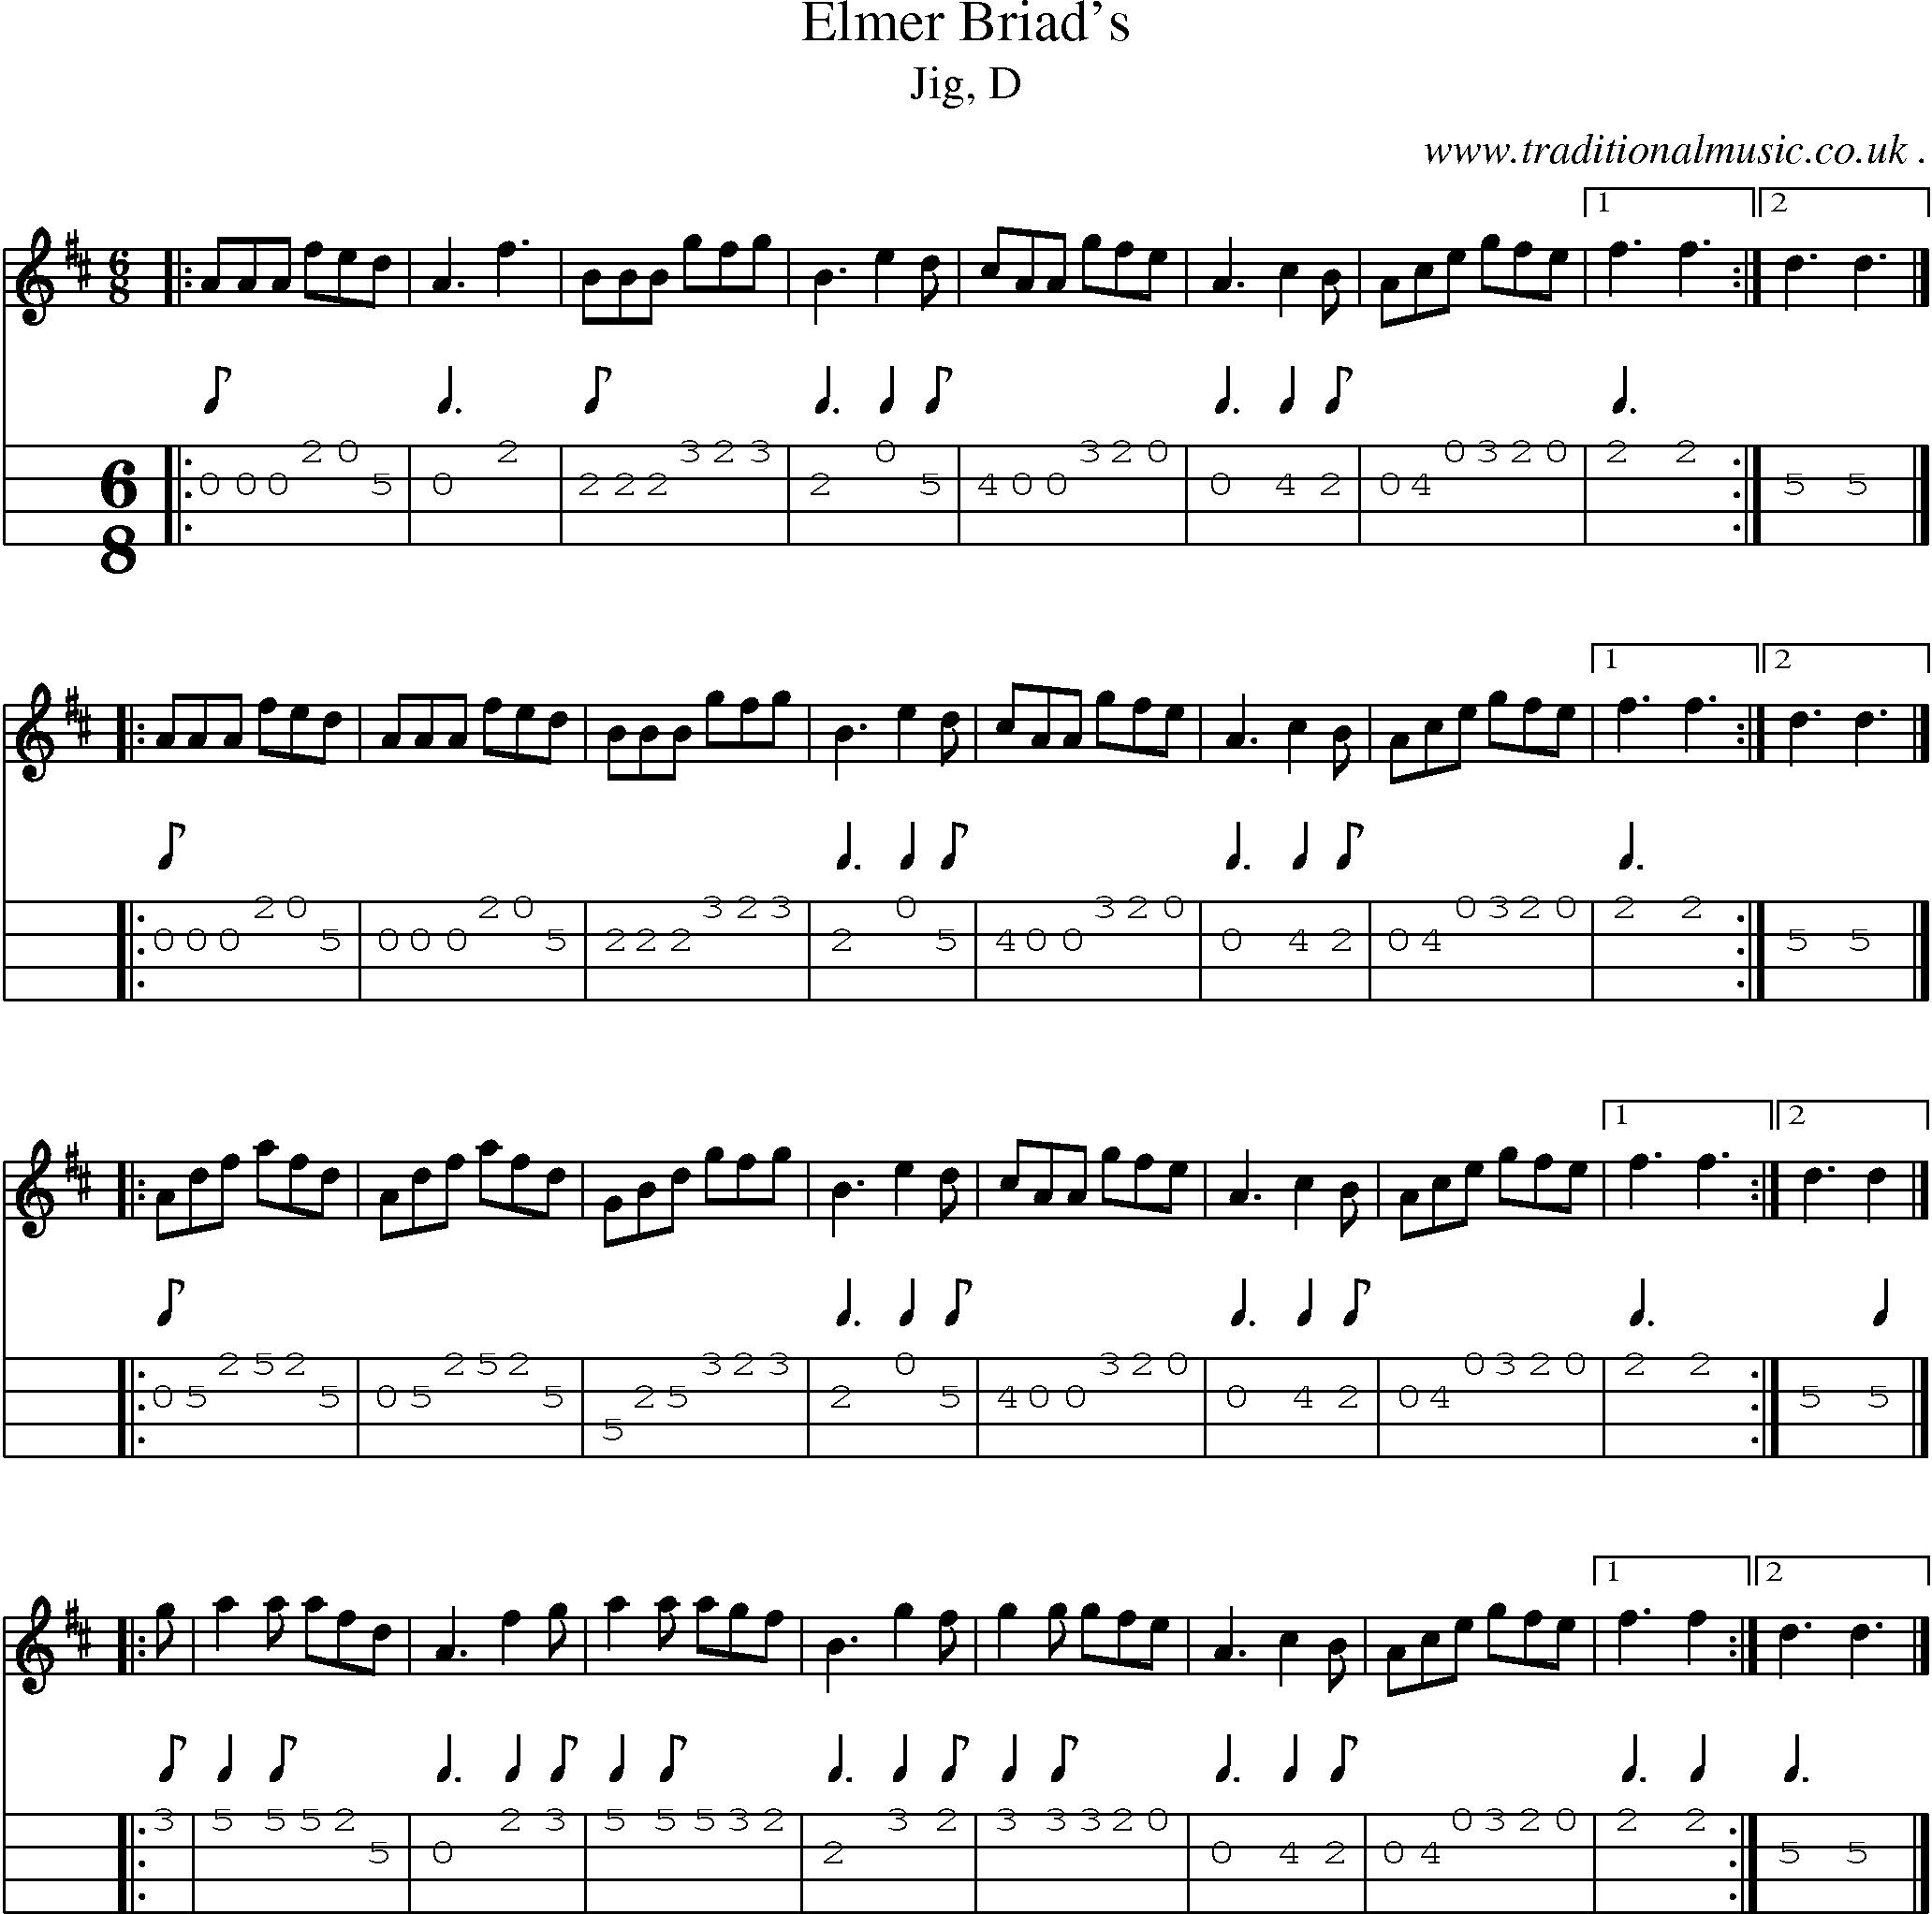 Sheet-music  score, Chords and Mandolin Tabs for Elmer Briads